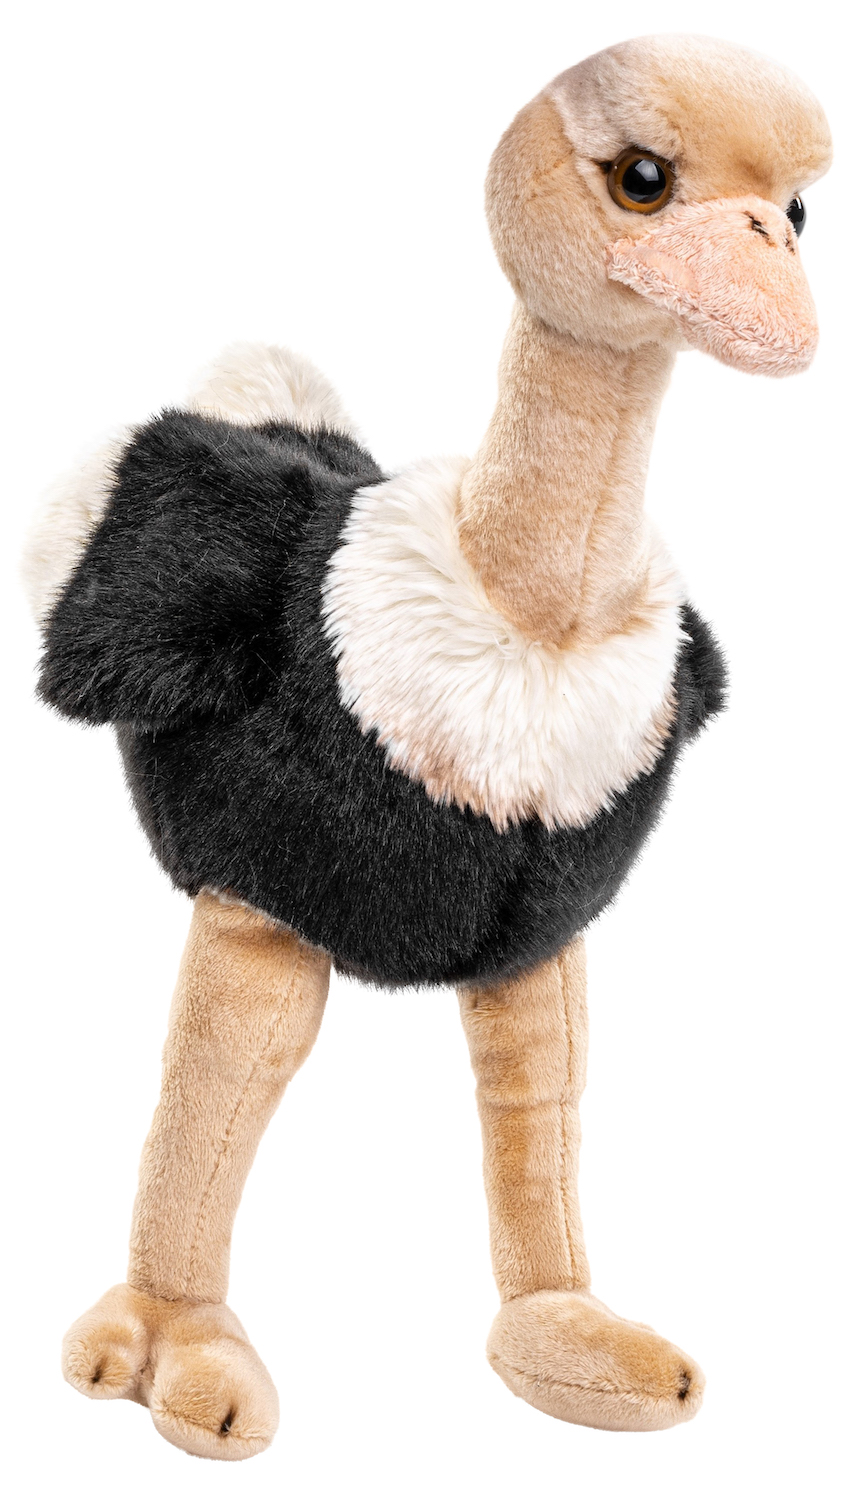 Ostrich - 28 cm (height) - Bird - Stuffed Animal, Plush Toy